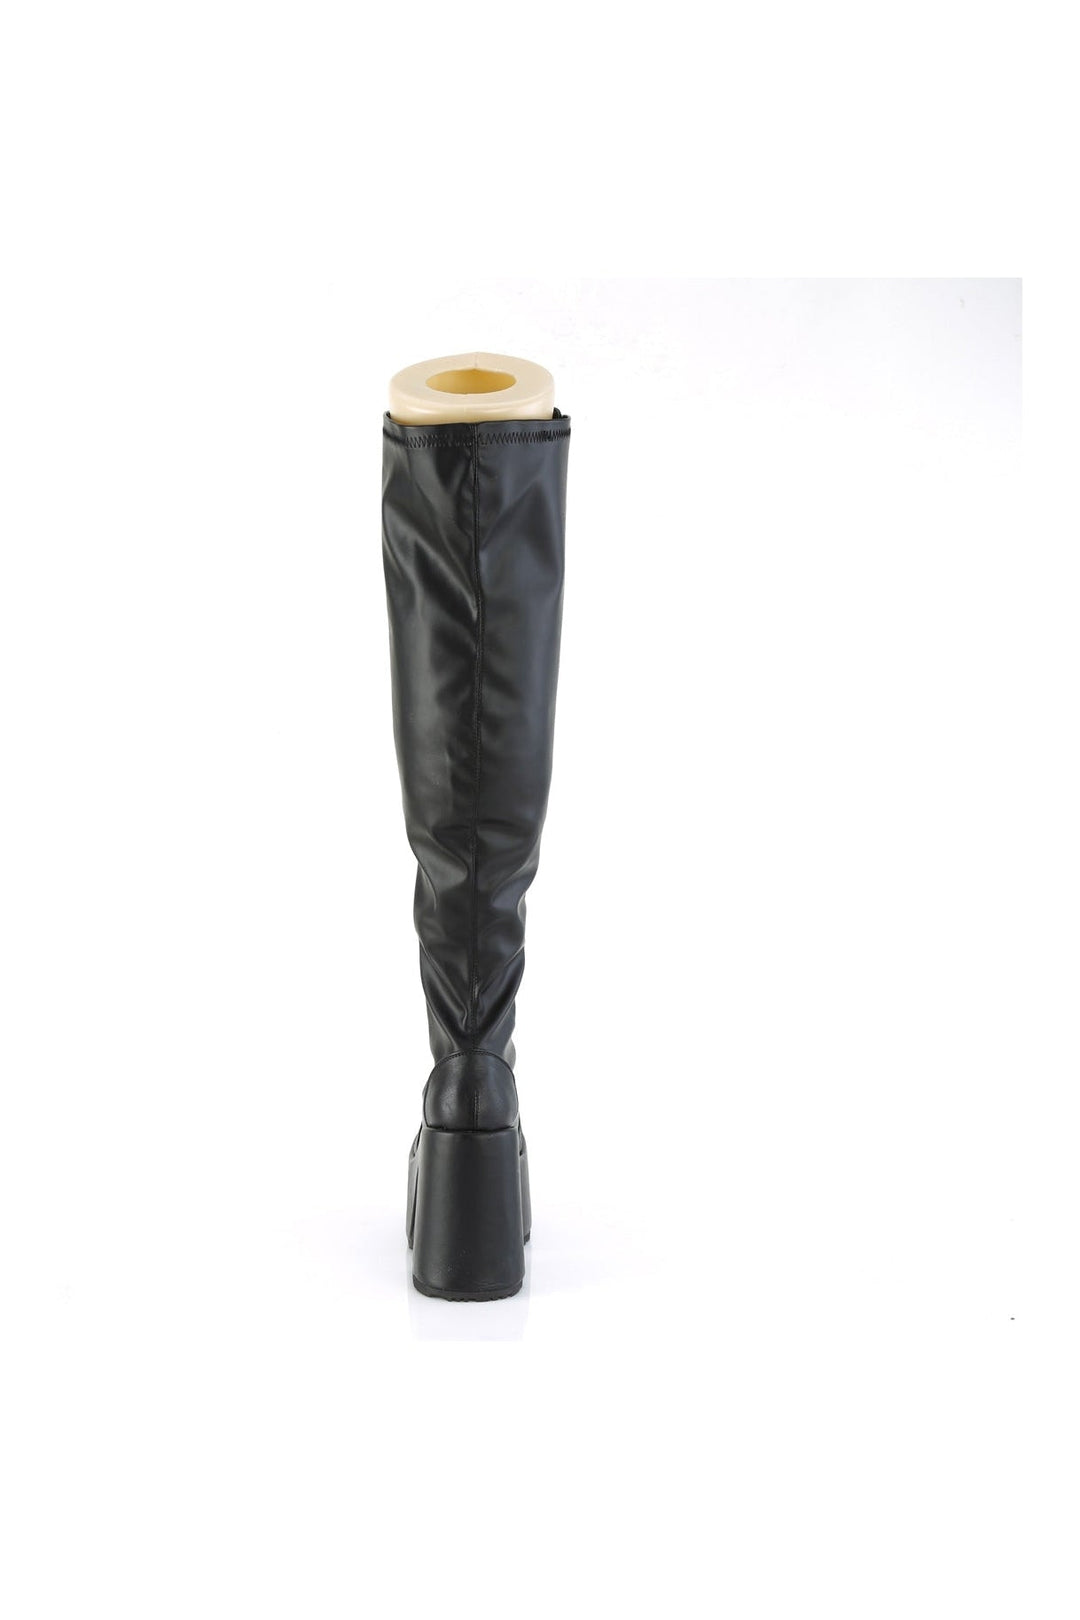 CAMEL-300WC Black Vegan Leather Thigh Boot